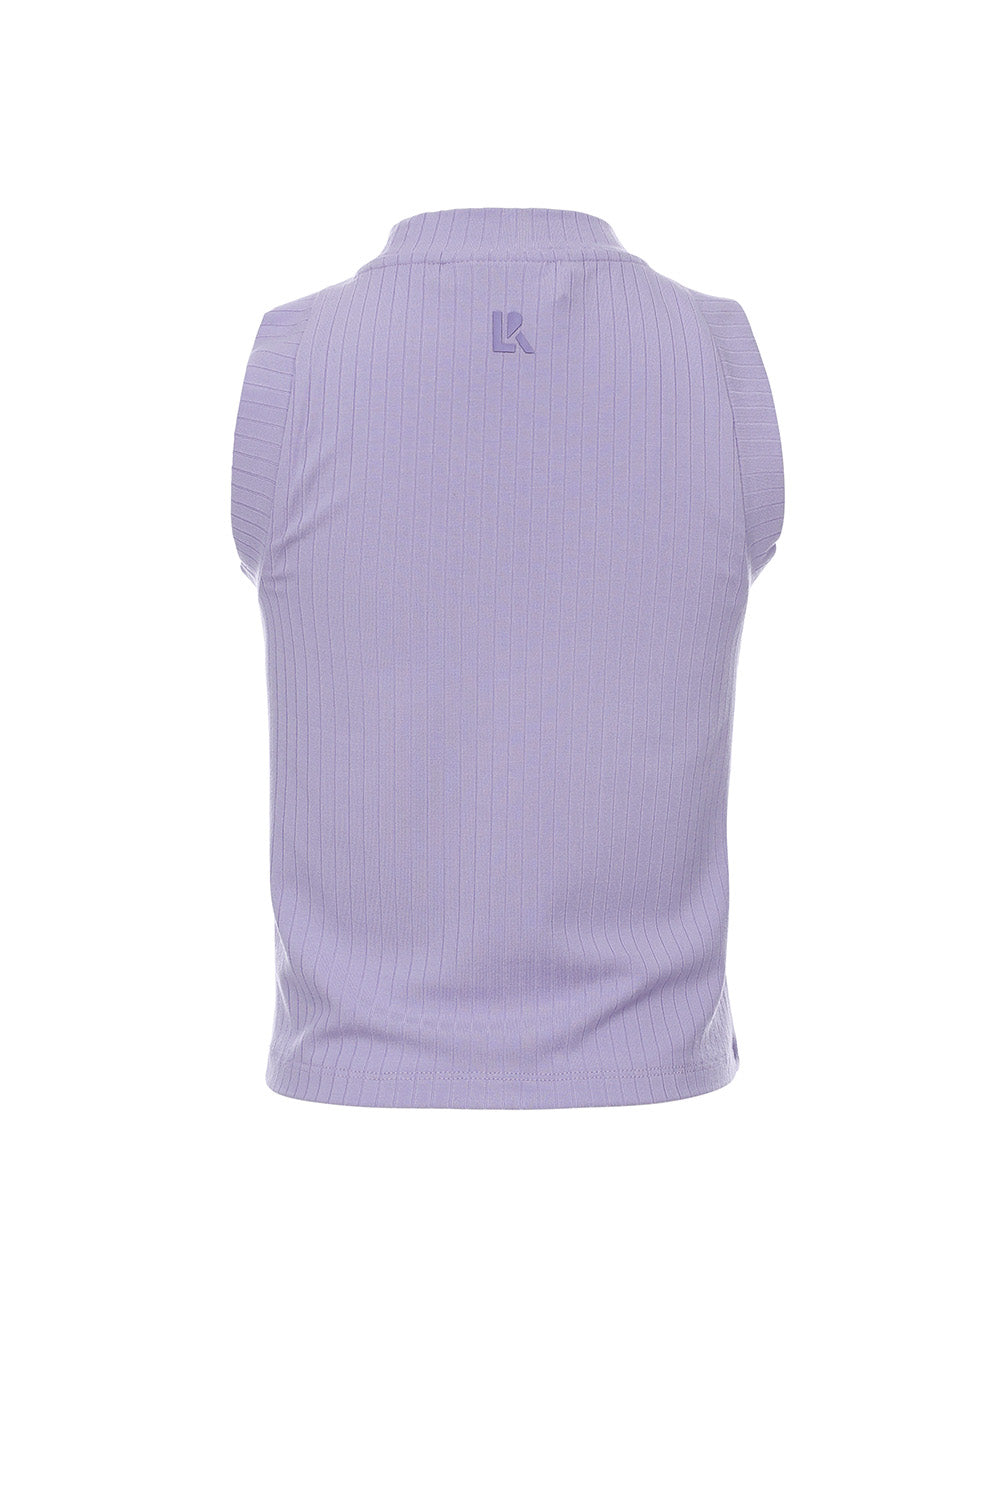 Meisjes Sleeveles T-Shirt van LOOXS 10sixteen in de kleur Pale purple in maat 176.